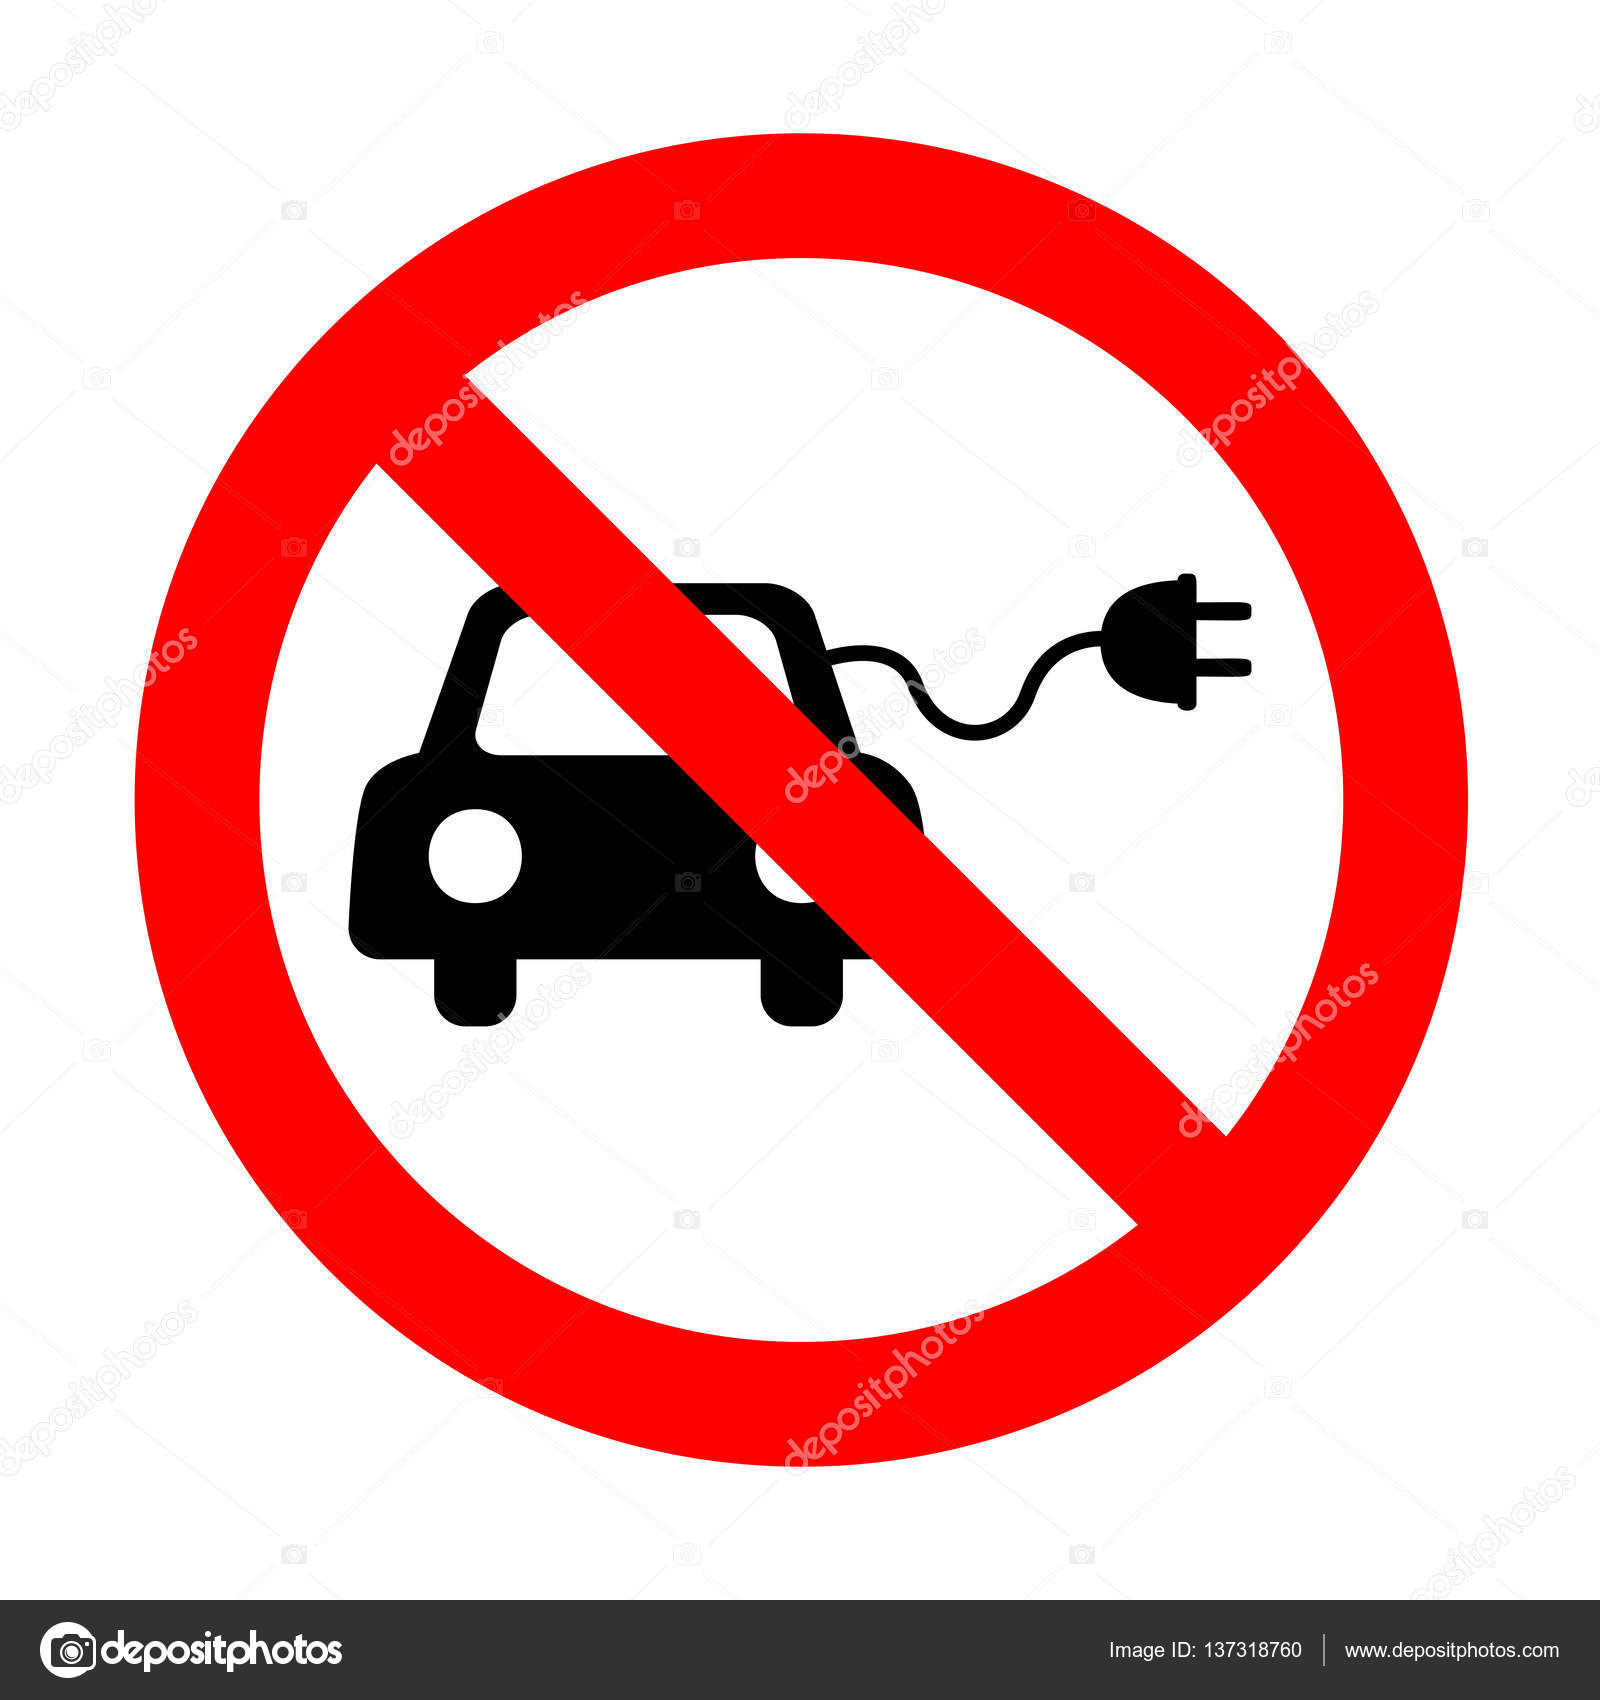 depositphotos_137318760-stock-illustration-no-eco-electric-car-sign_1.jpg